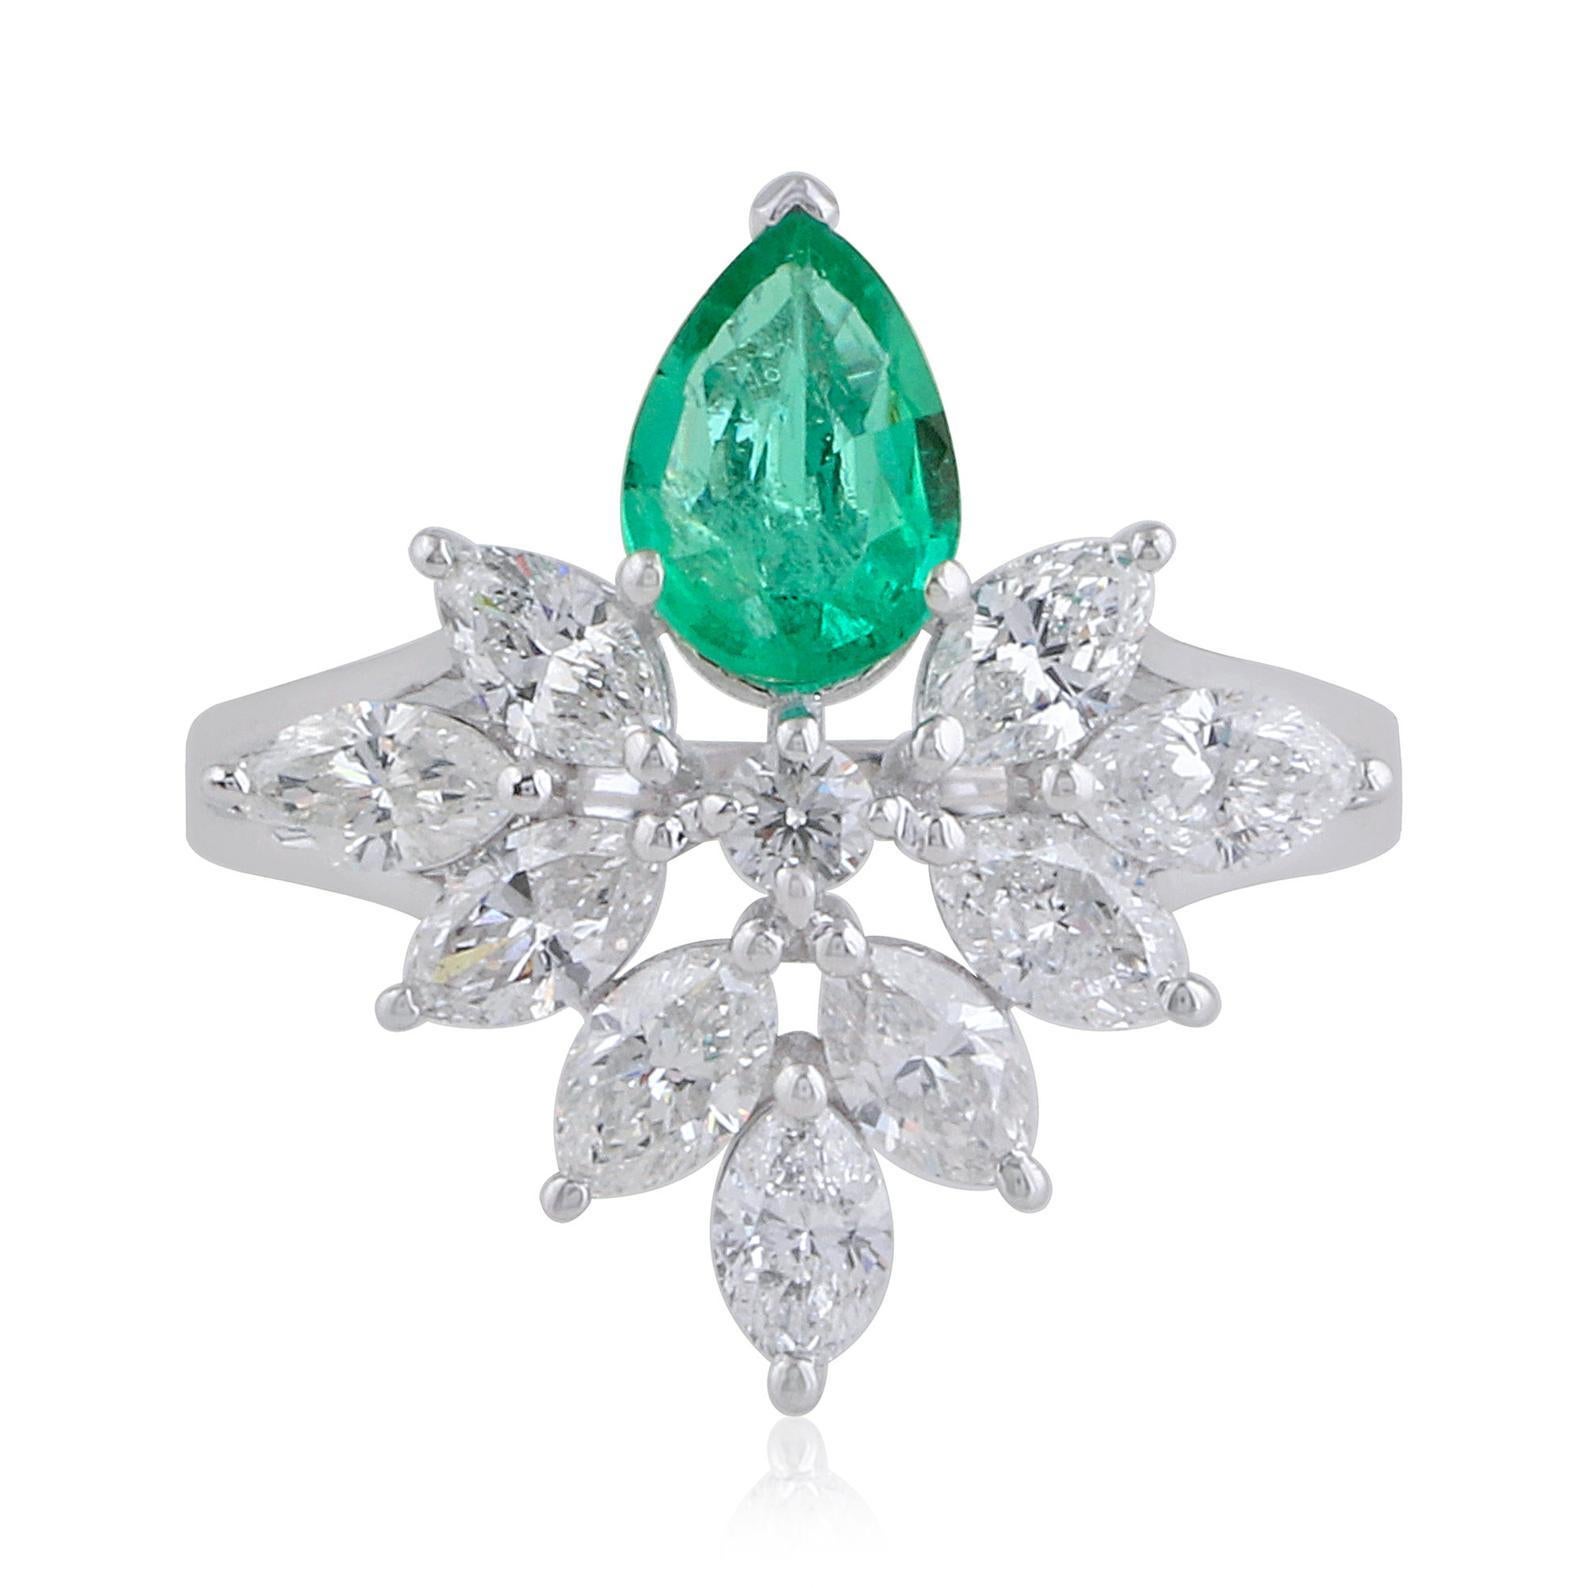 Mixed Cut 35.40 Carats Diamond Zambian Emerald 14 Karat Gold Earrings Necklace Ring Set For Sale